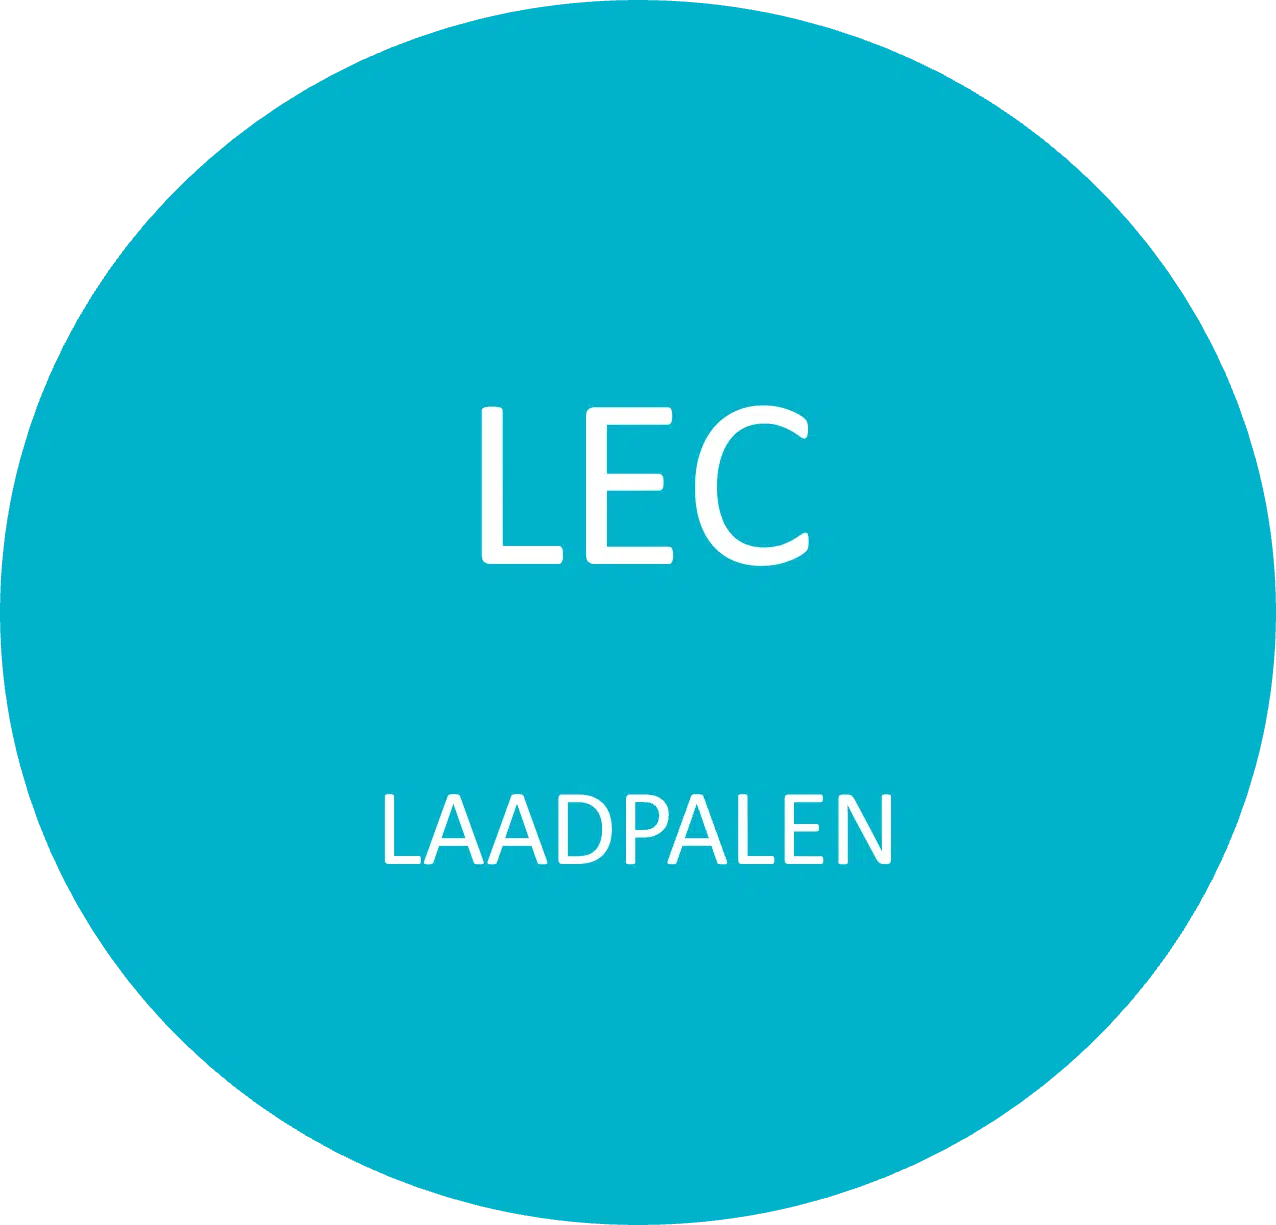 lec energy solutions laadpalen